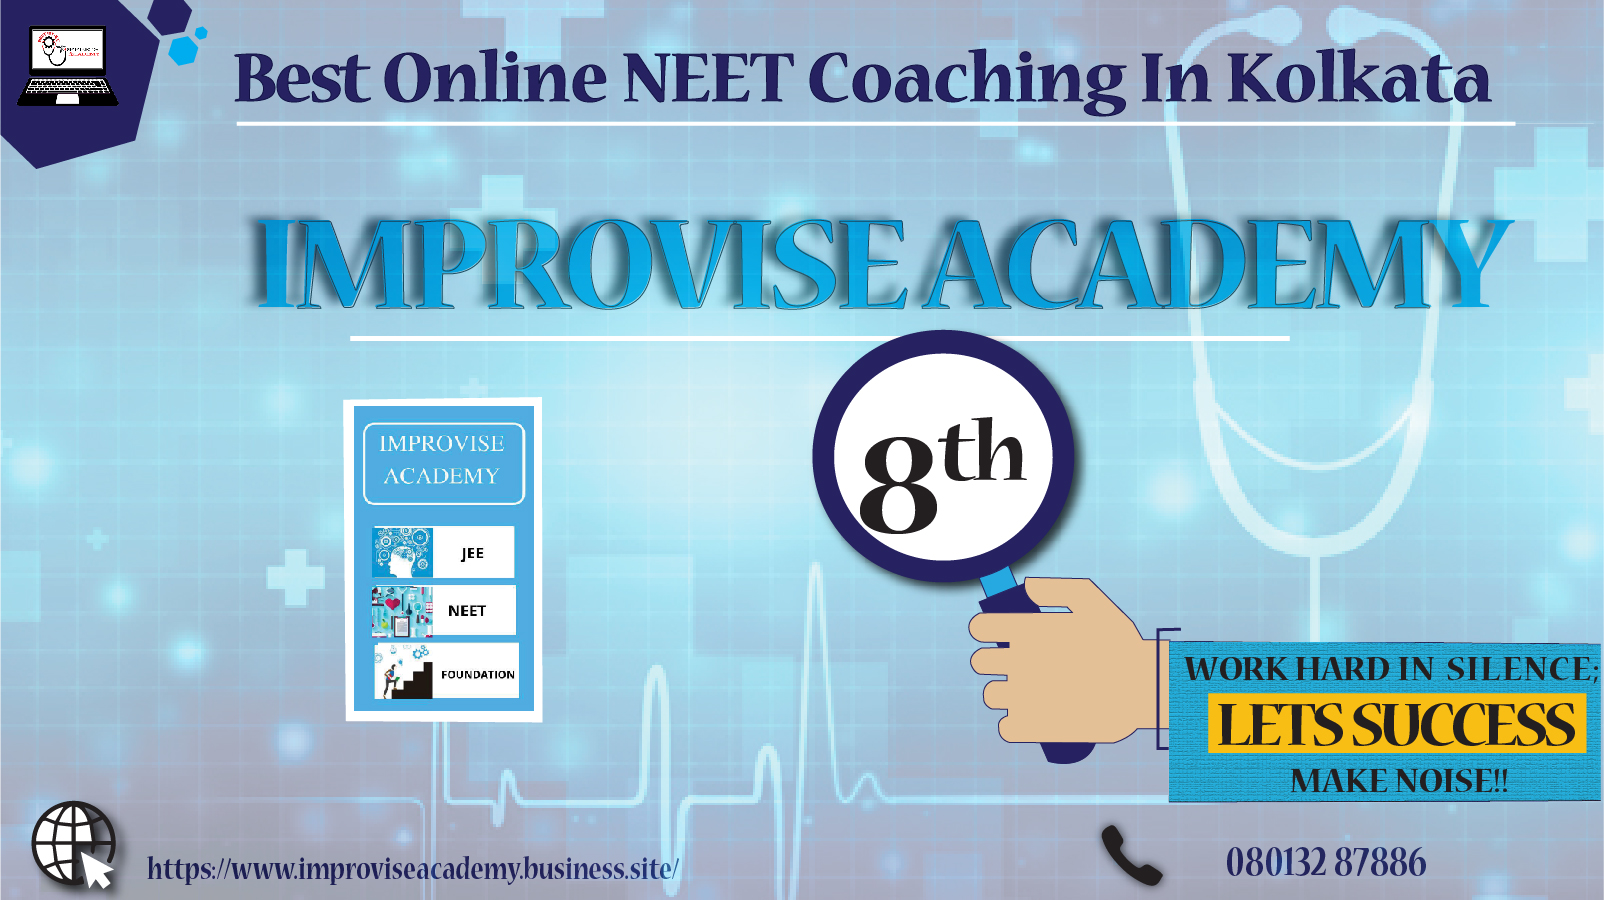 Best coaching institute for neet in kolkata